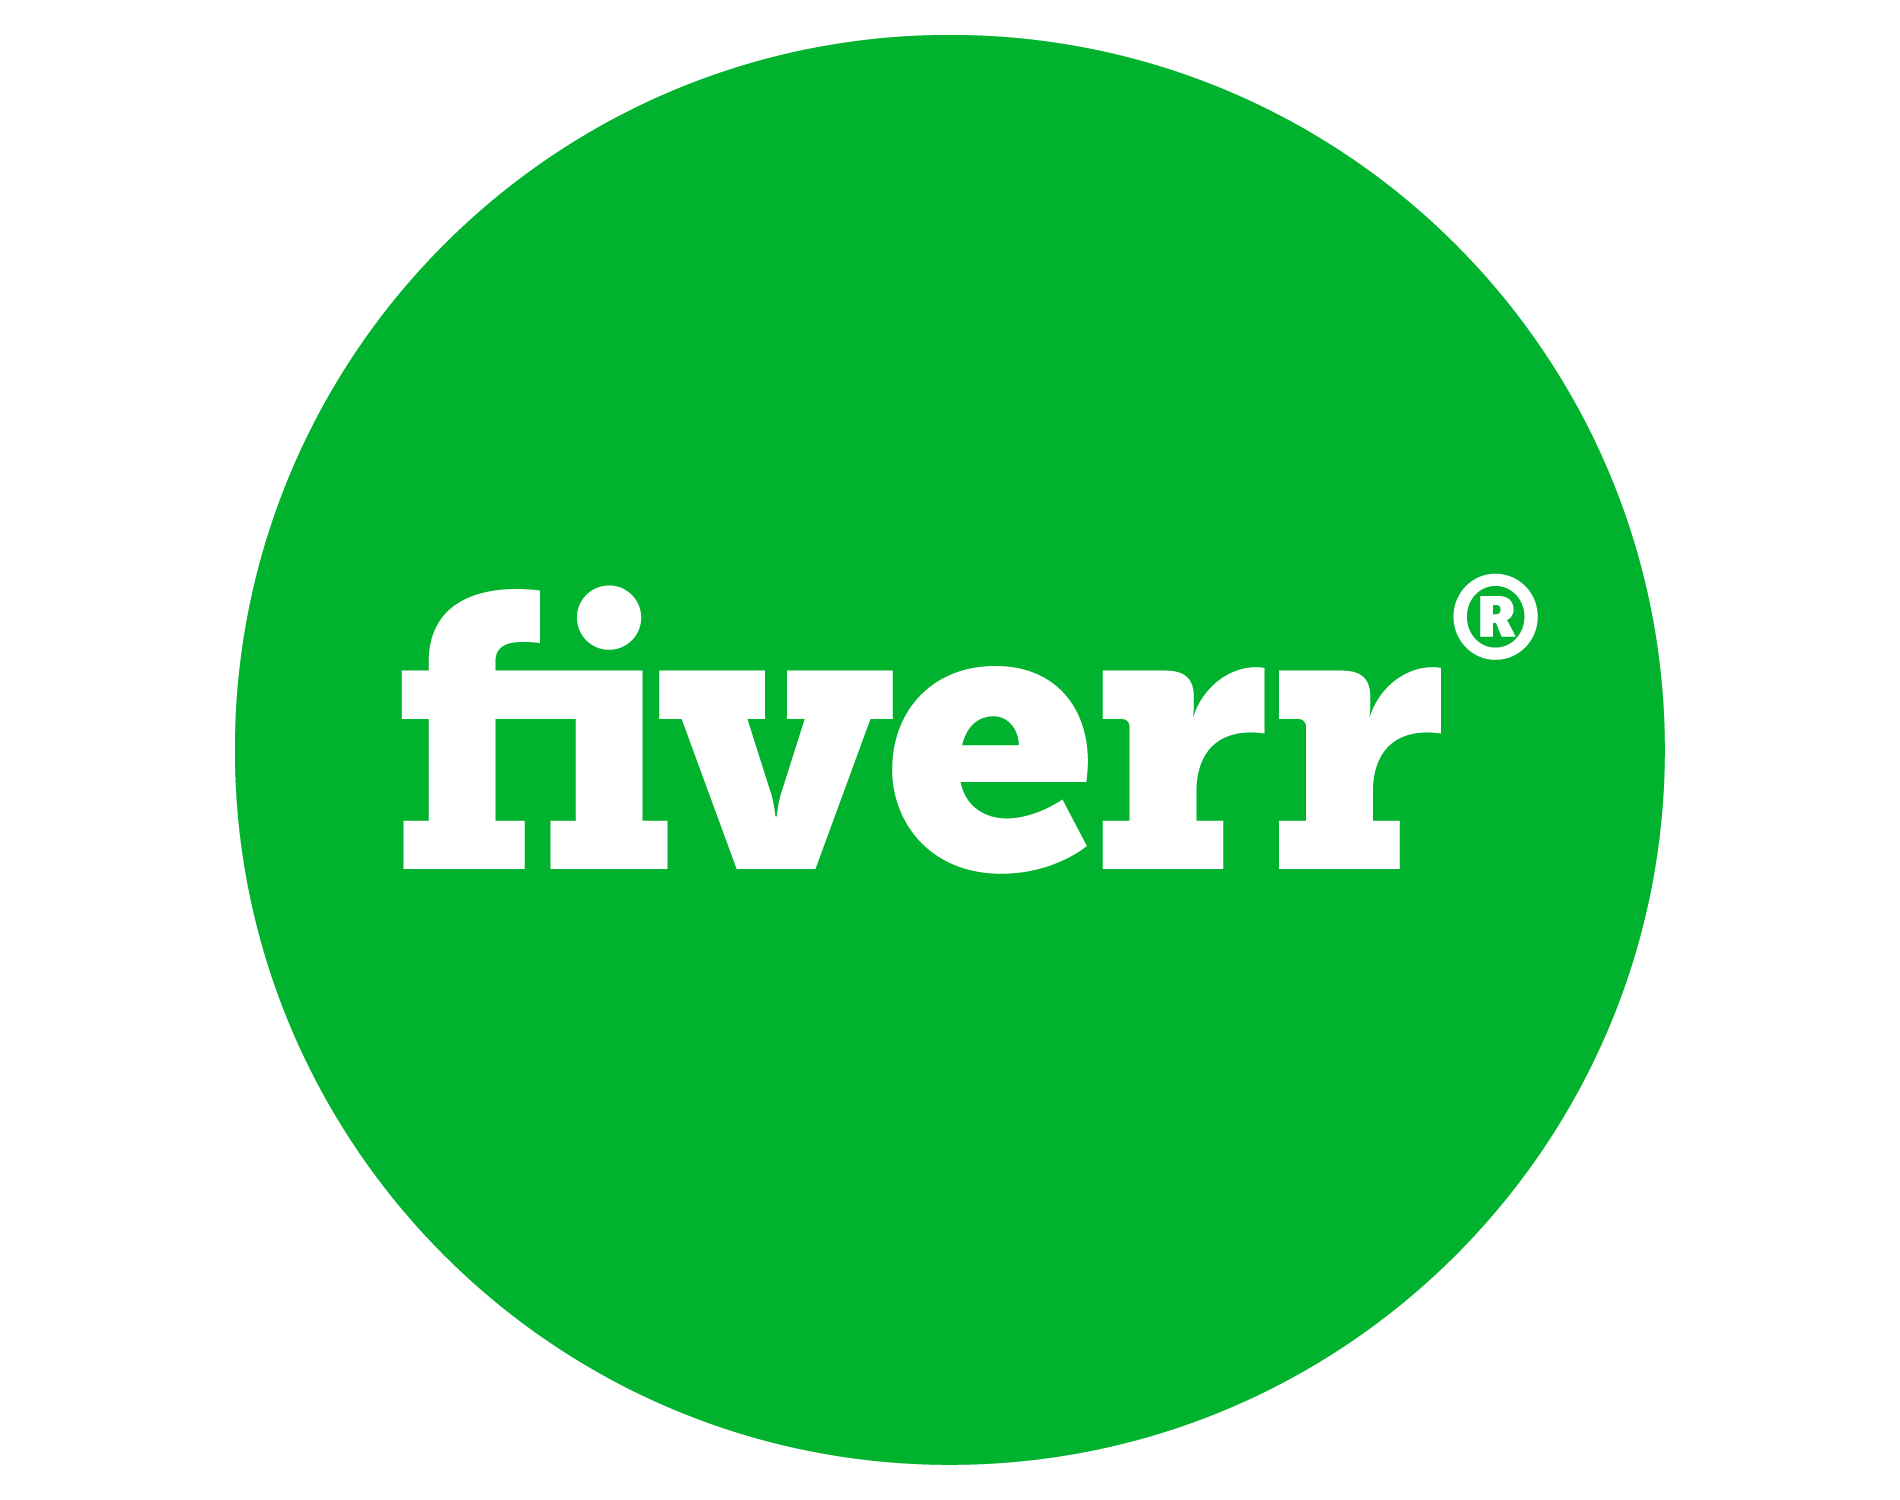 fiverr logo